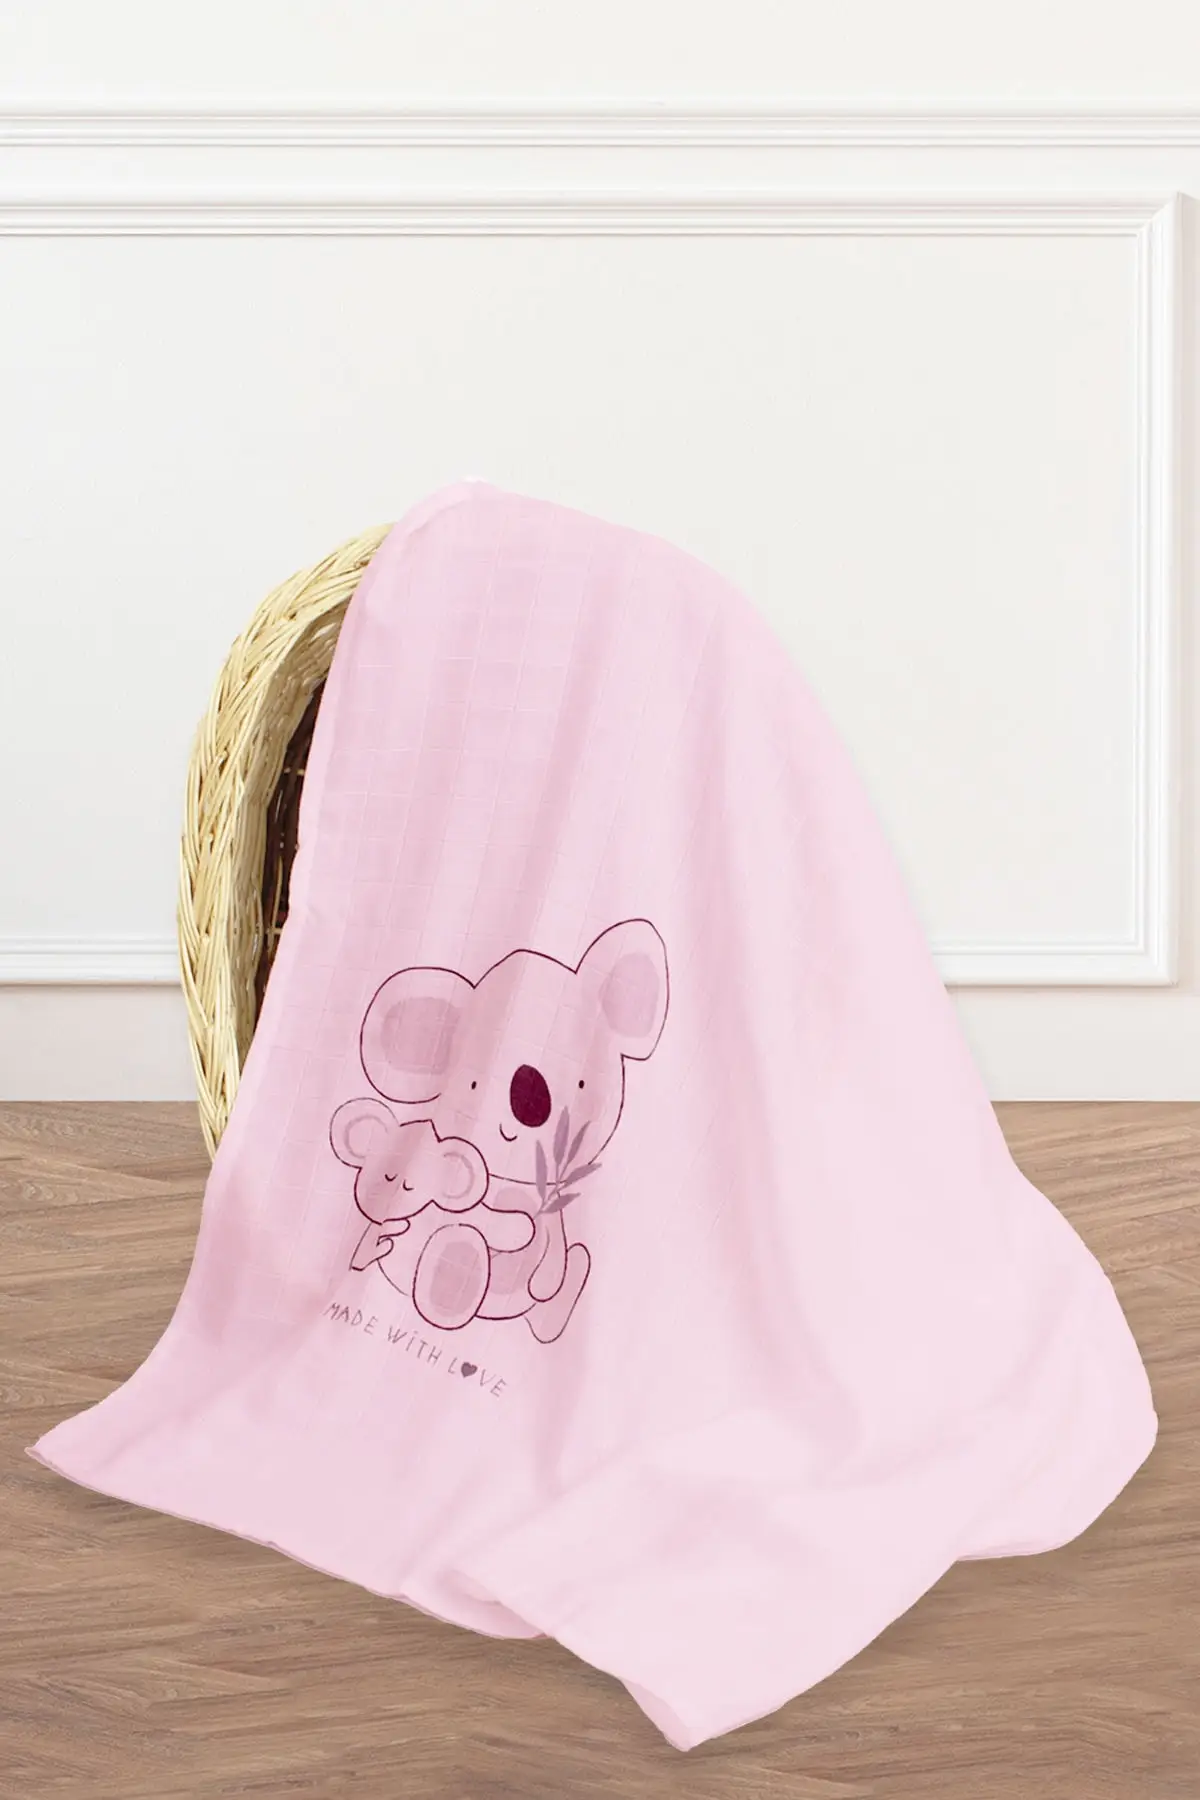 Bamboo Koala Girls Boys Baby Multi-Purpose Müslin Blanket 100 × 130 Cm Pink 100x130 Baby & Kids blanket Home Textile